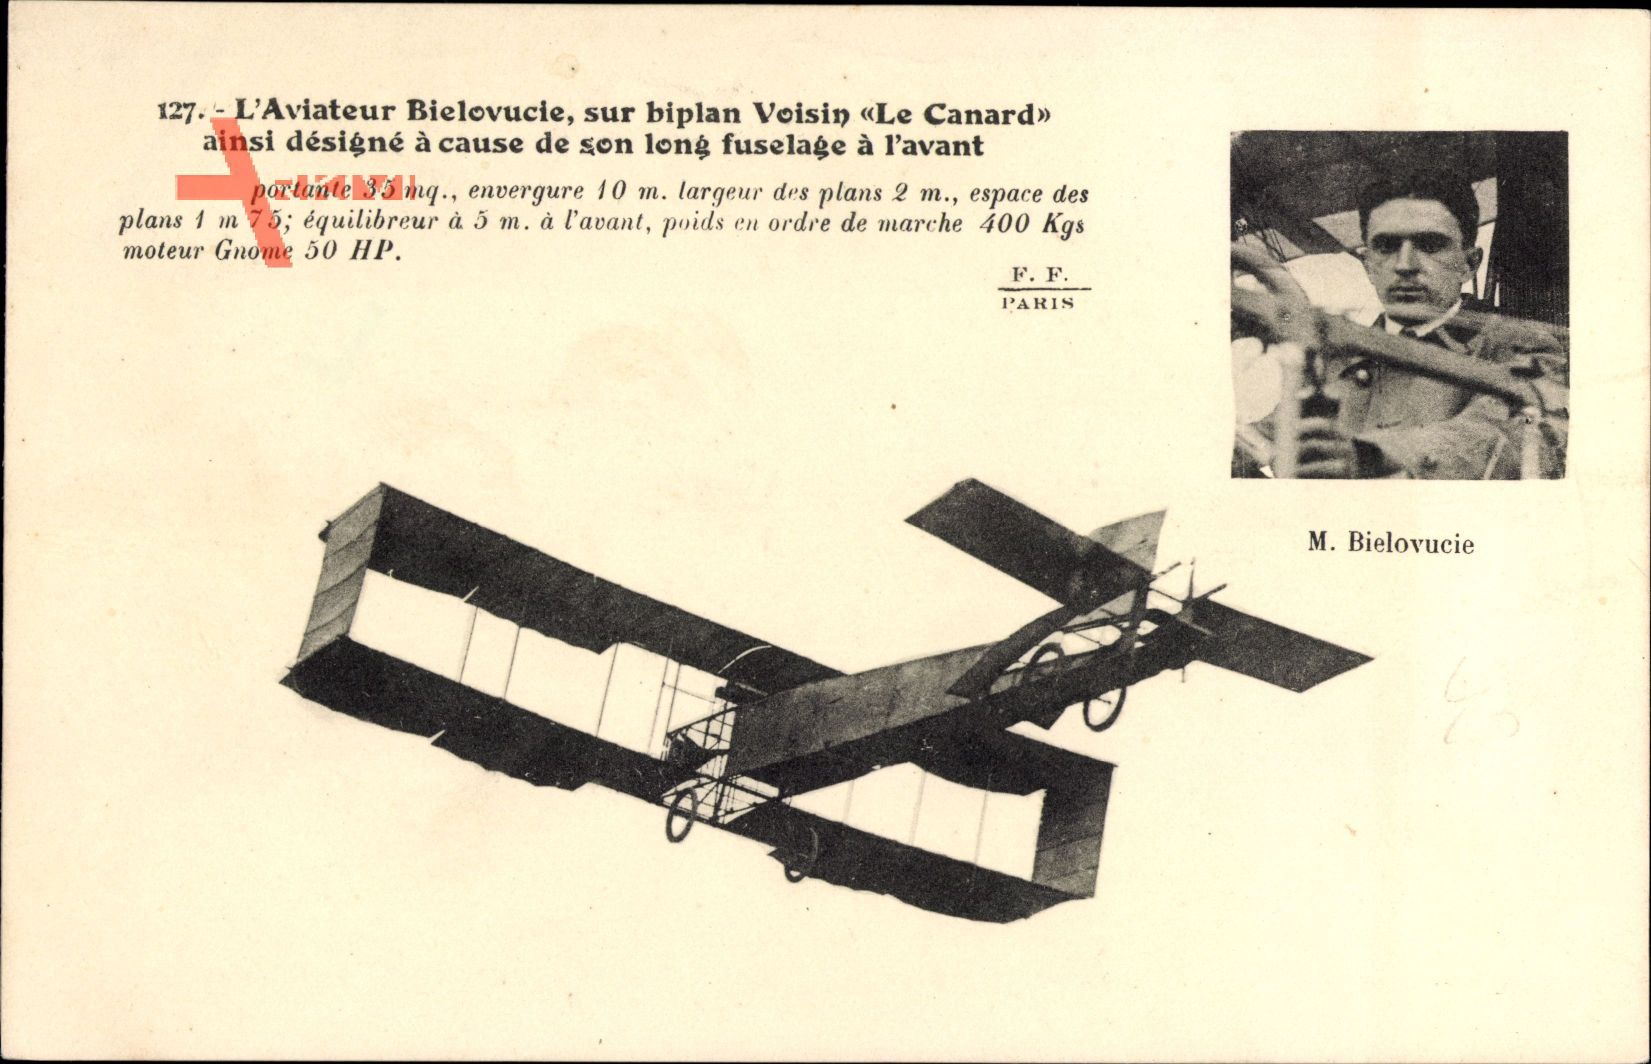 Aviateur Bielovucie, Biplan Voisin, Le Canard, Flugpionier